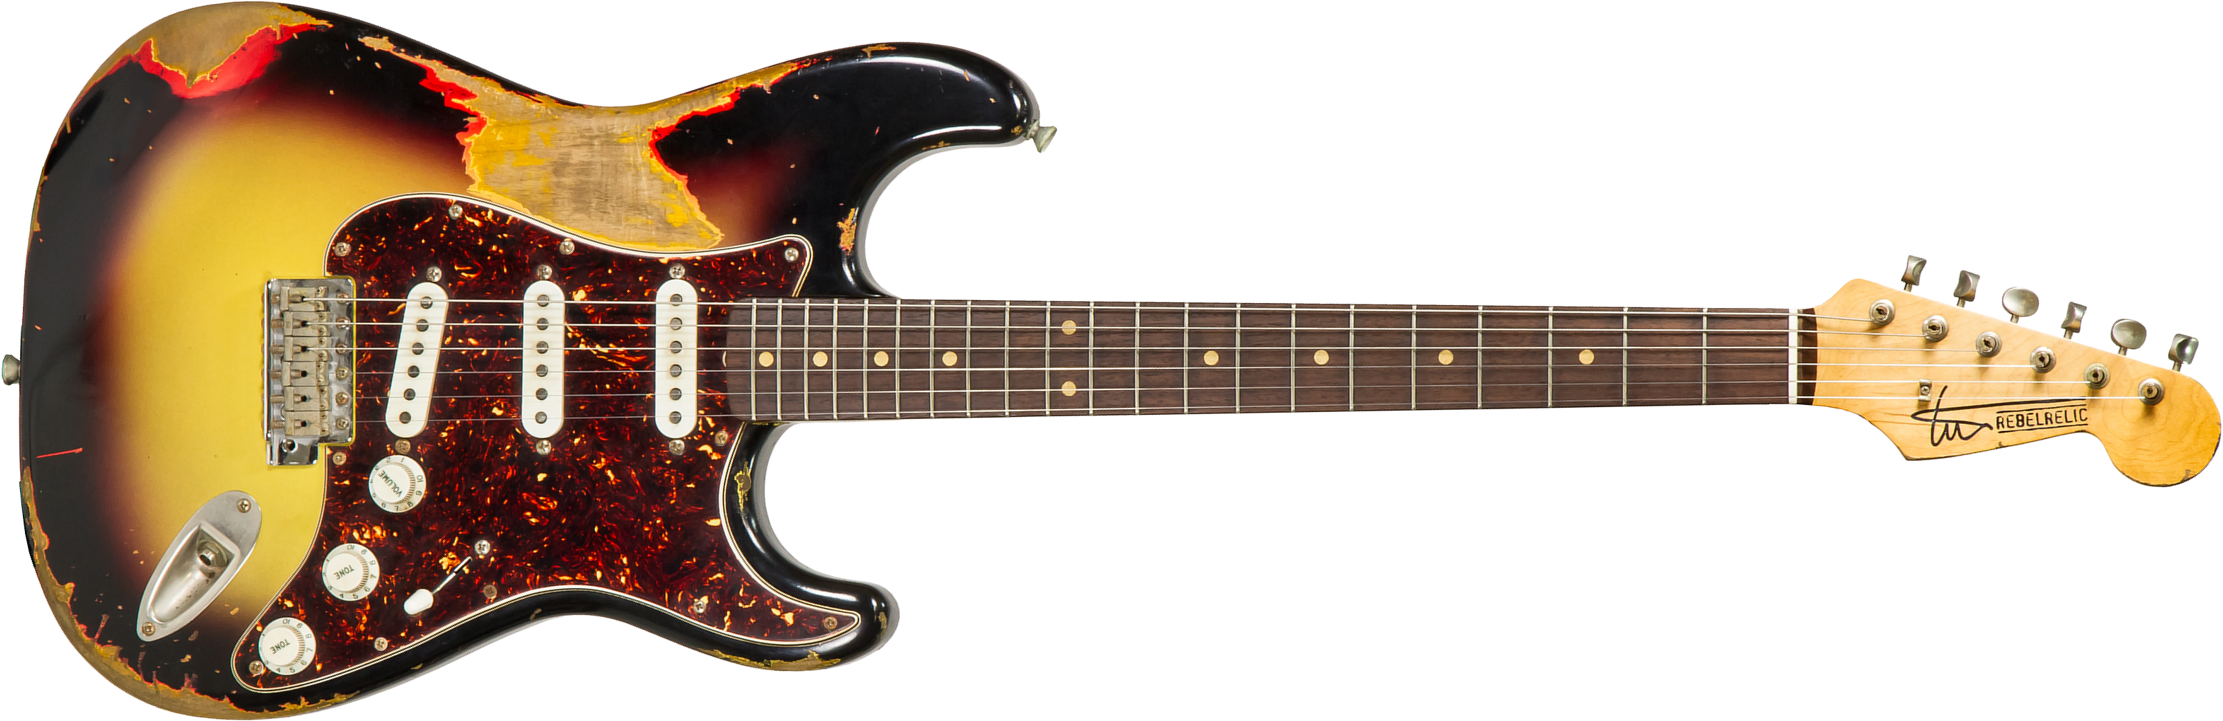 Rebelrelic S-series 62 Rw #62110 - Heavy Aging 3-tone Sunburst - Str shape electric guitar - Main picture